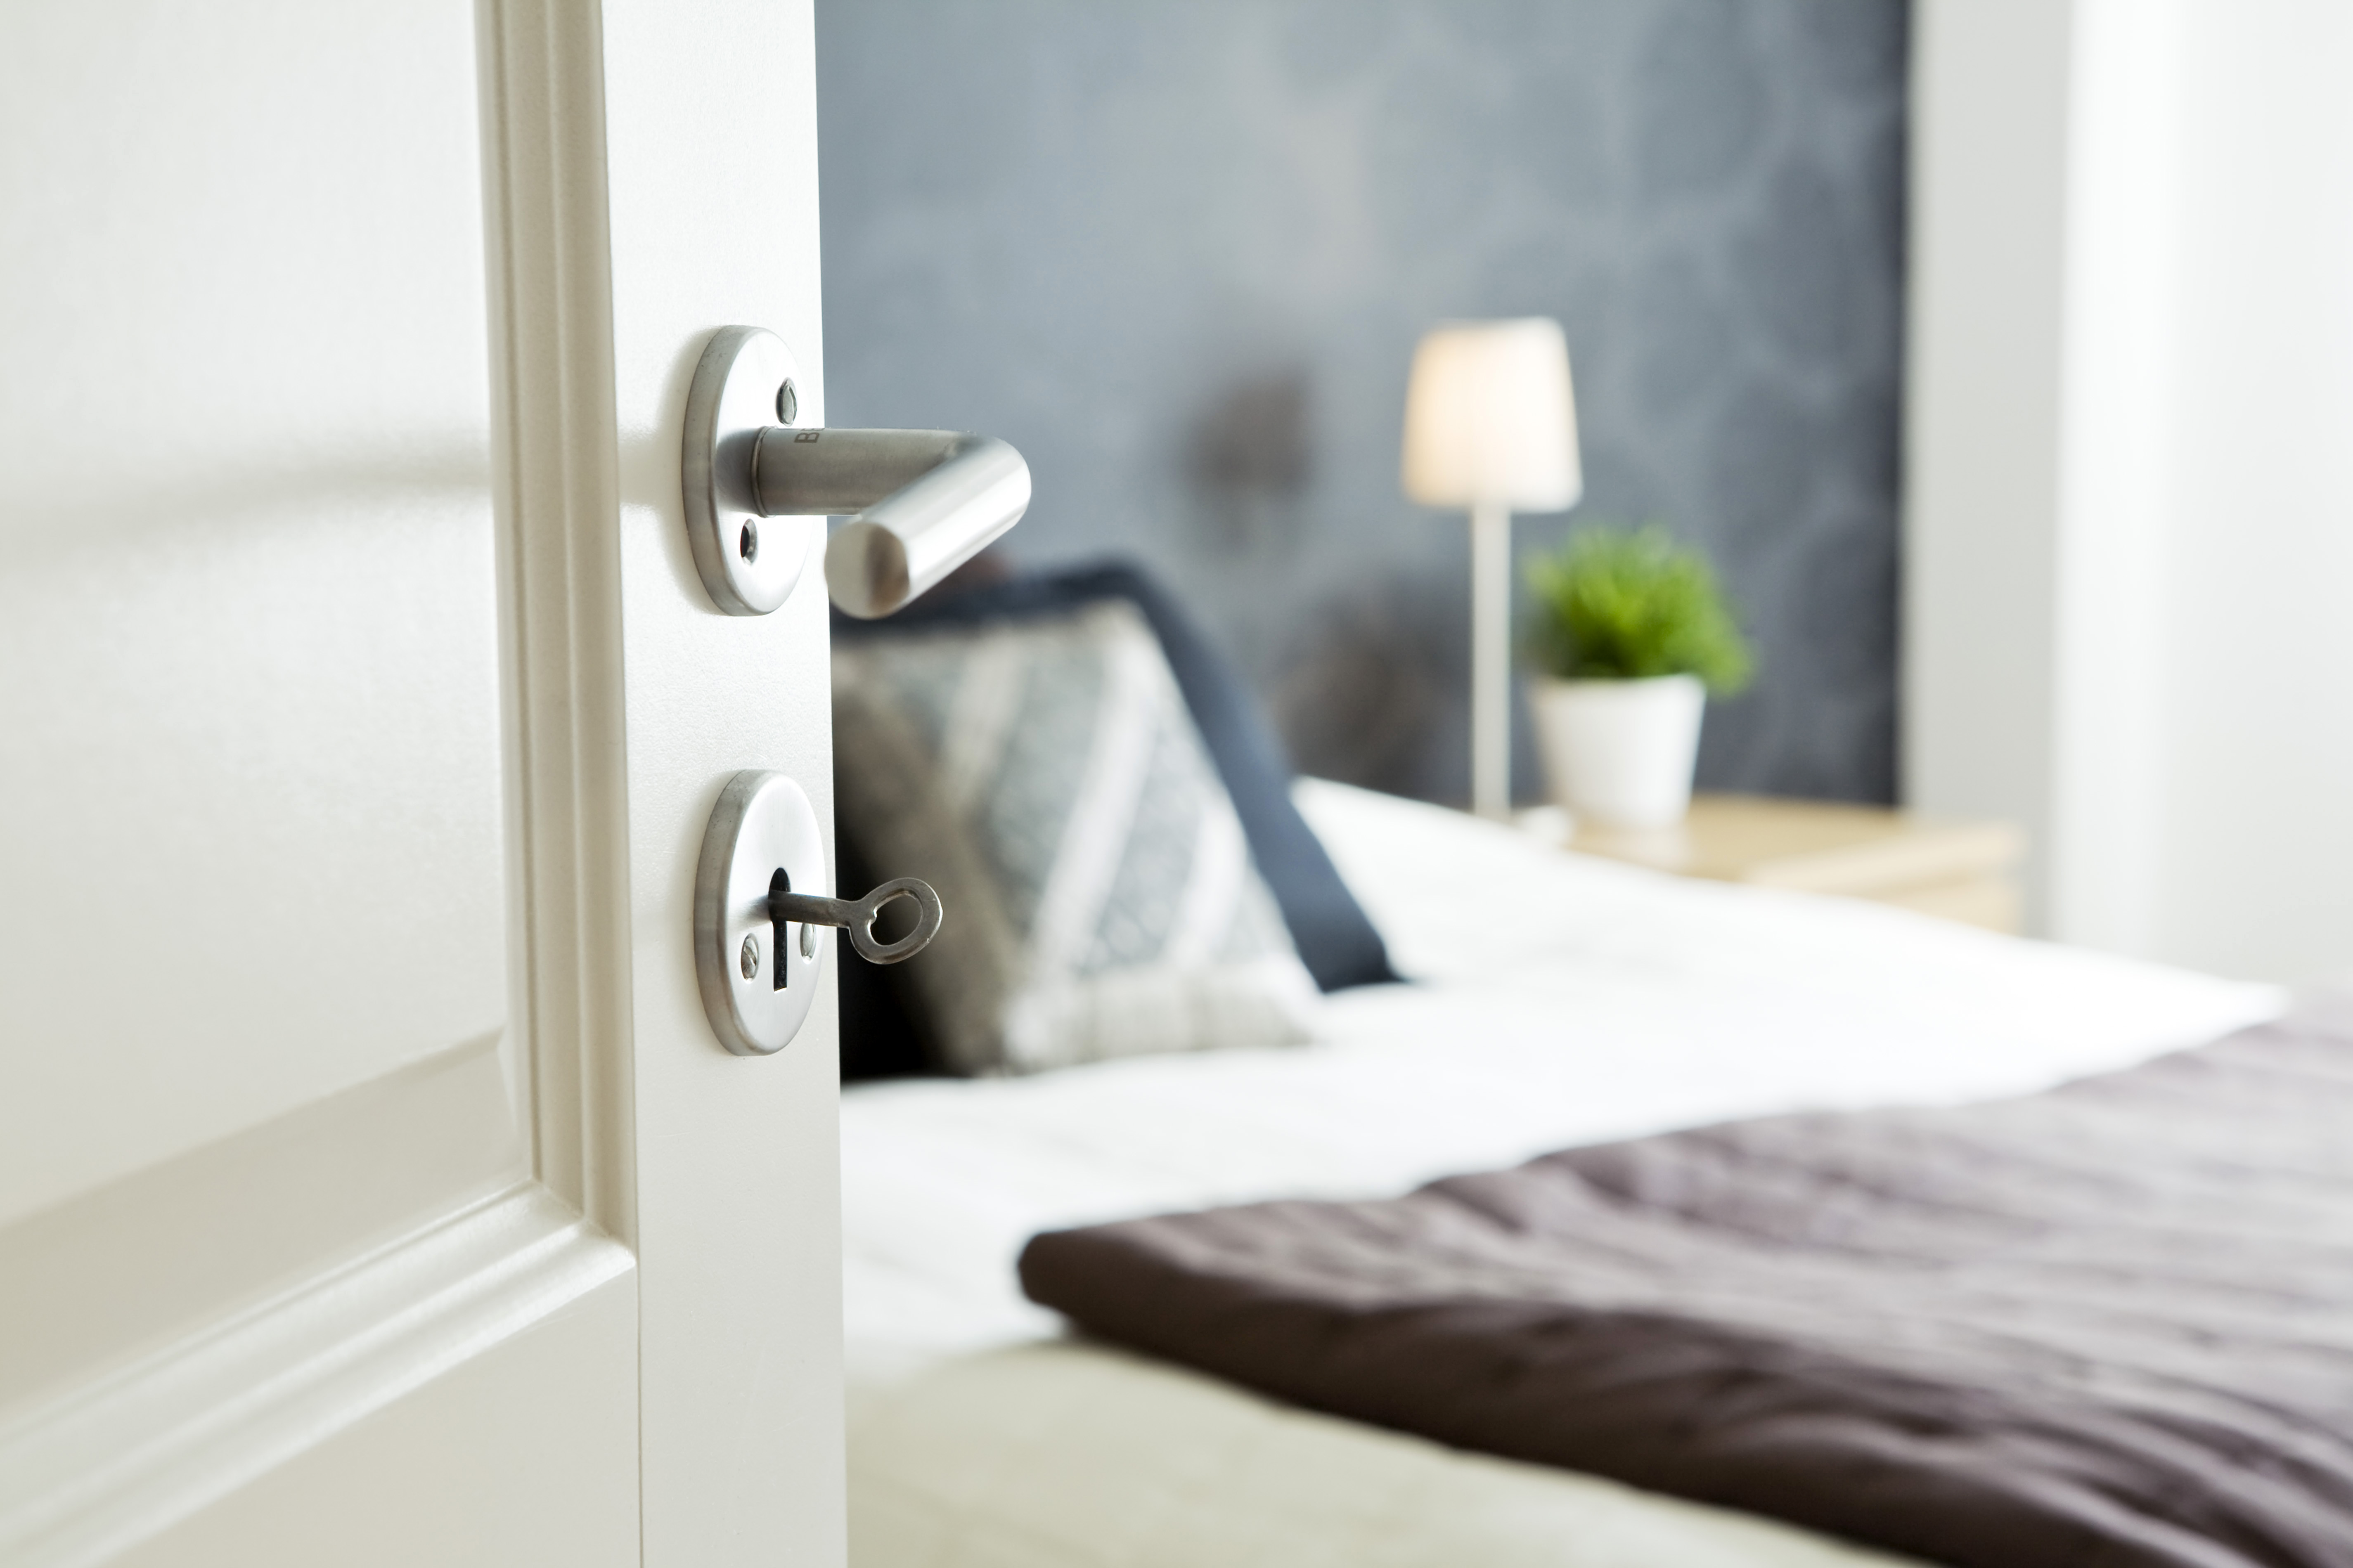 Open bedroom door with a key inside | Source: Getty Images